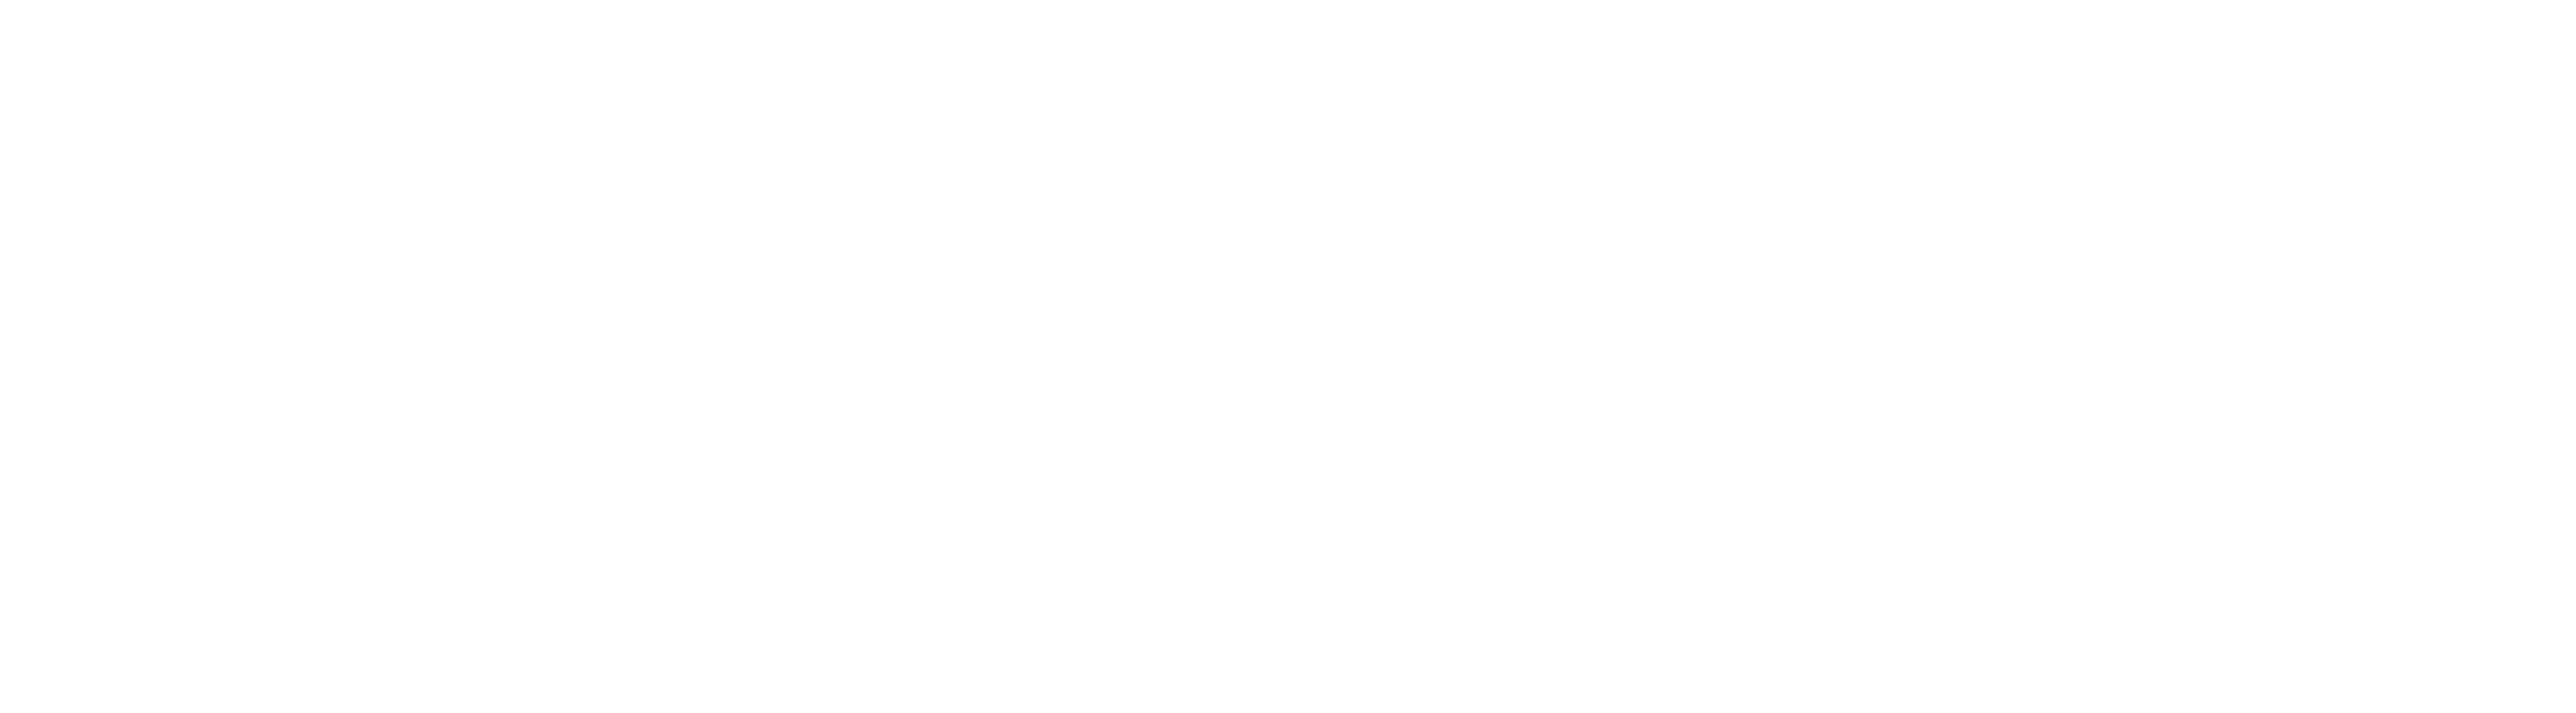 GMO holding Ltd.